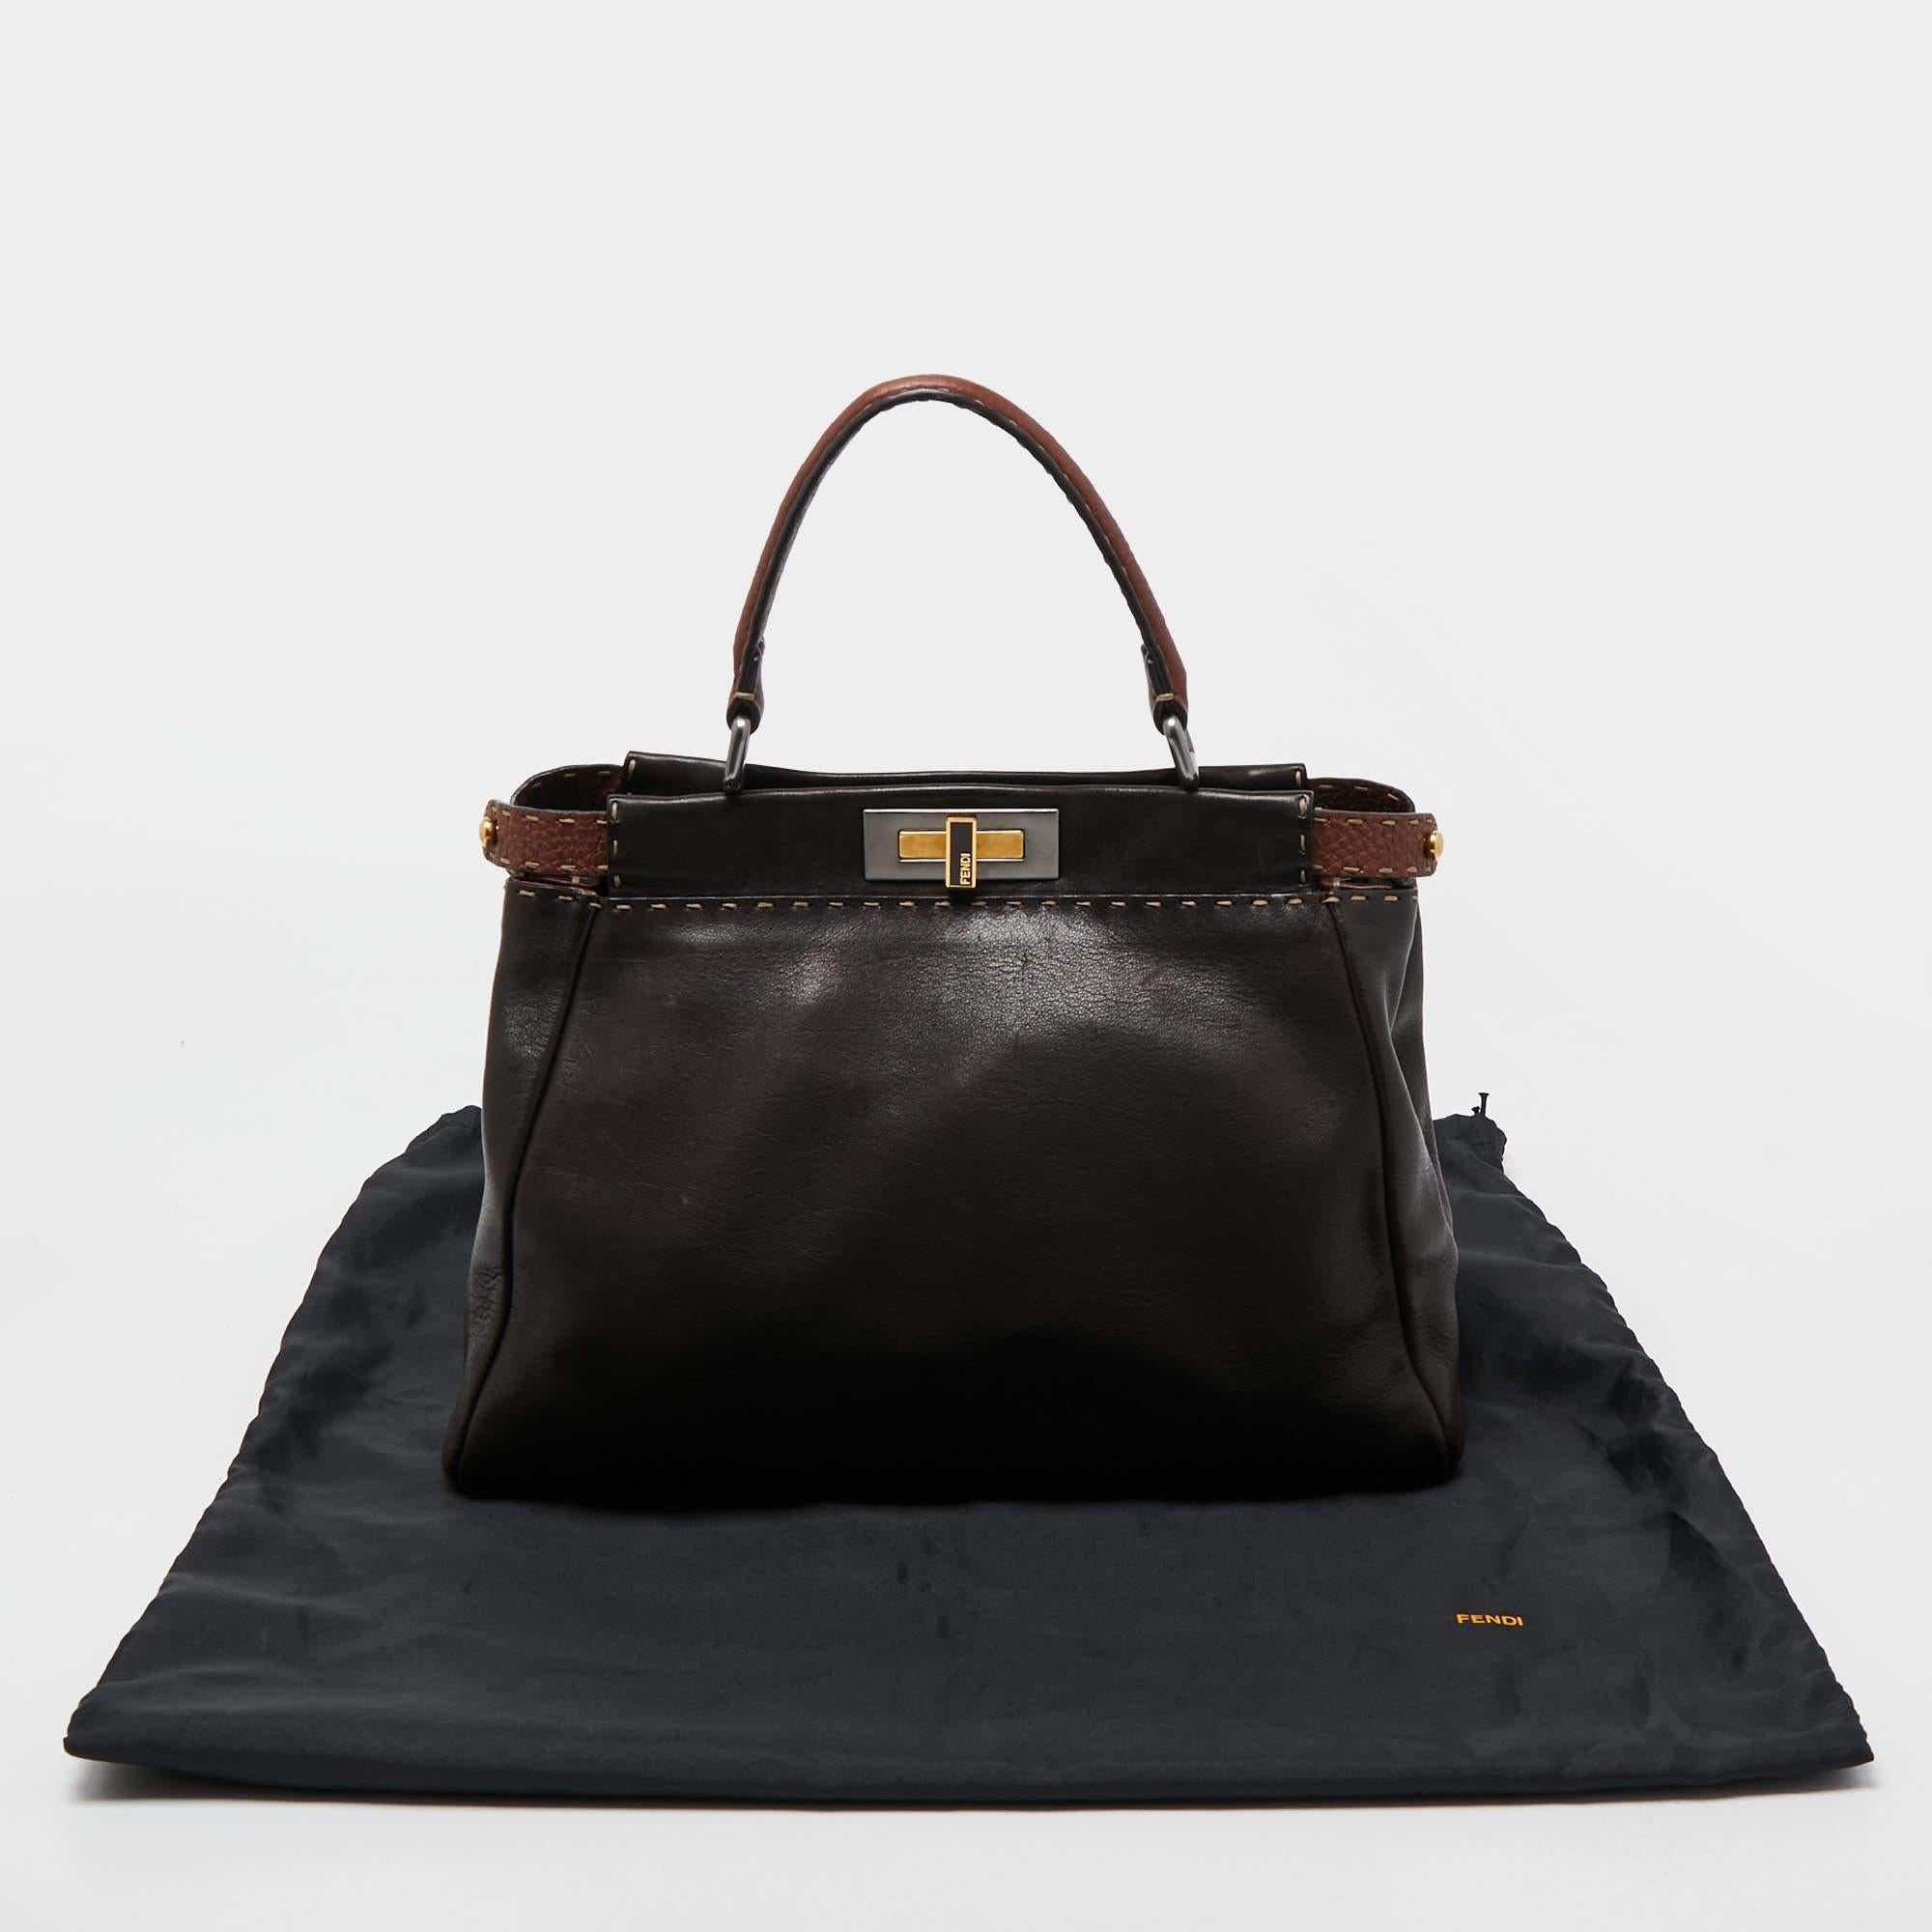 Fendi Dark Brown Leather Small Peekaboo Top Handle Bag 8